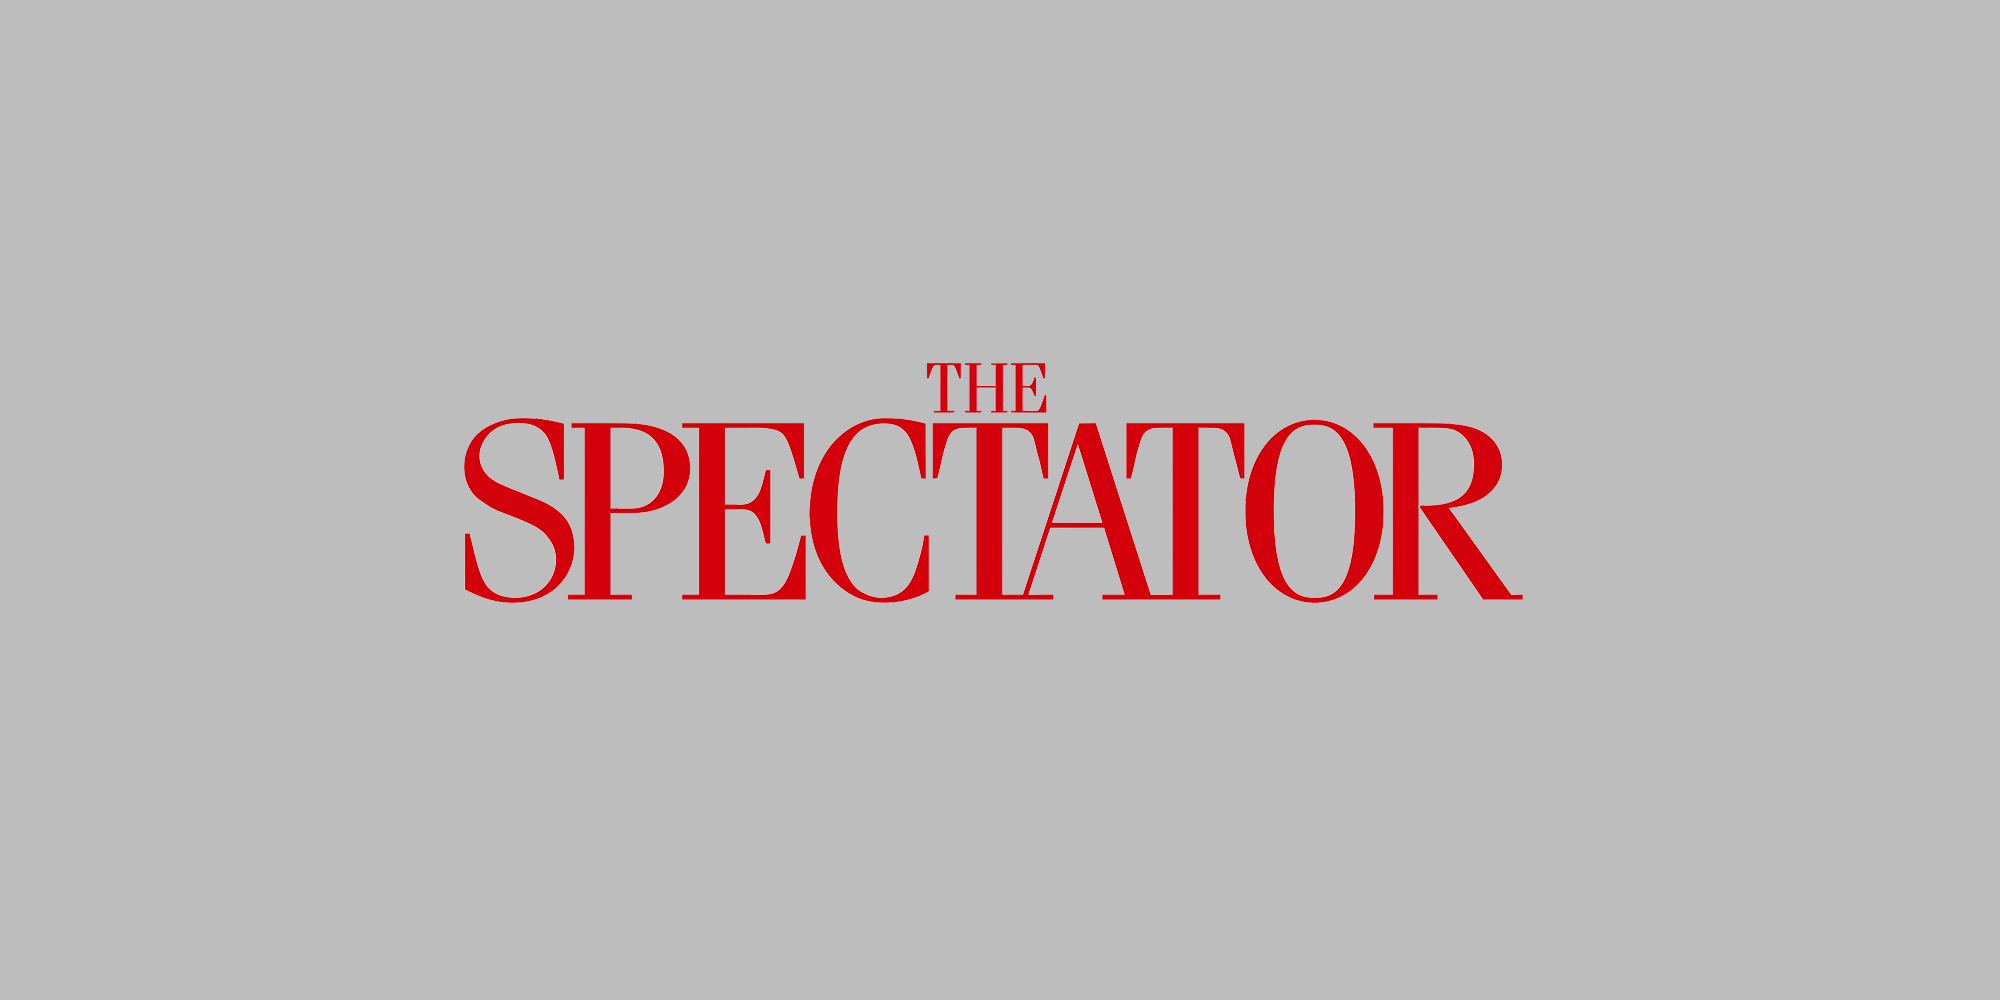 The-Spectator-blogpost